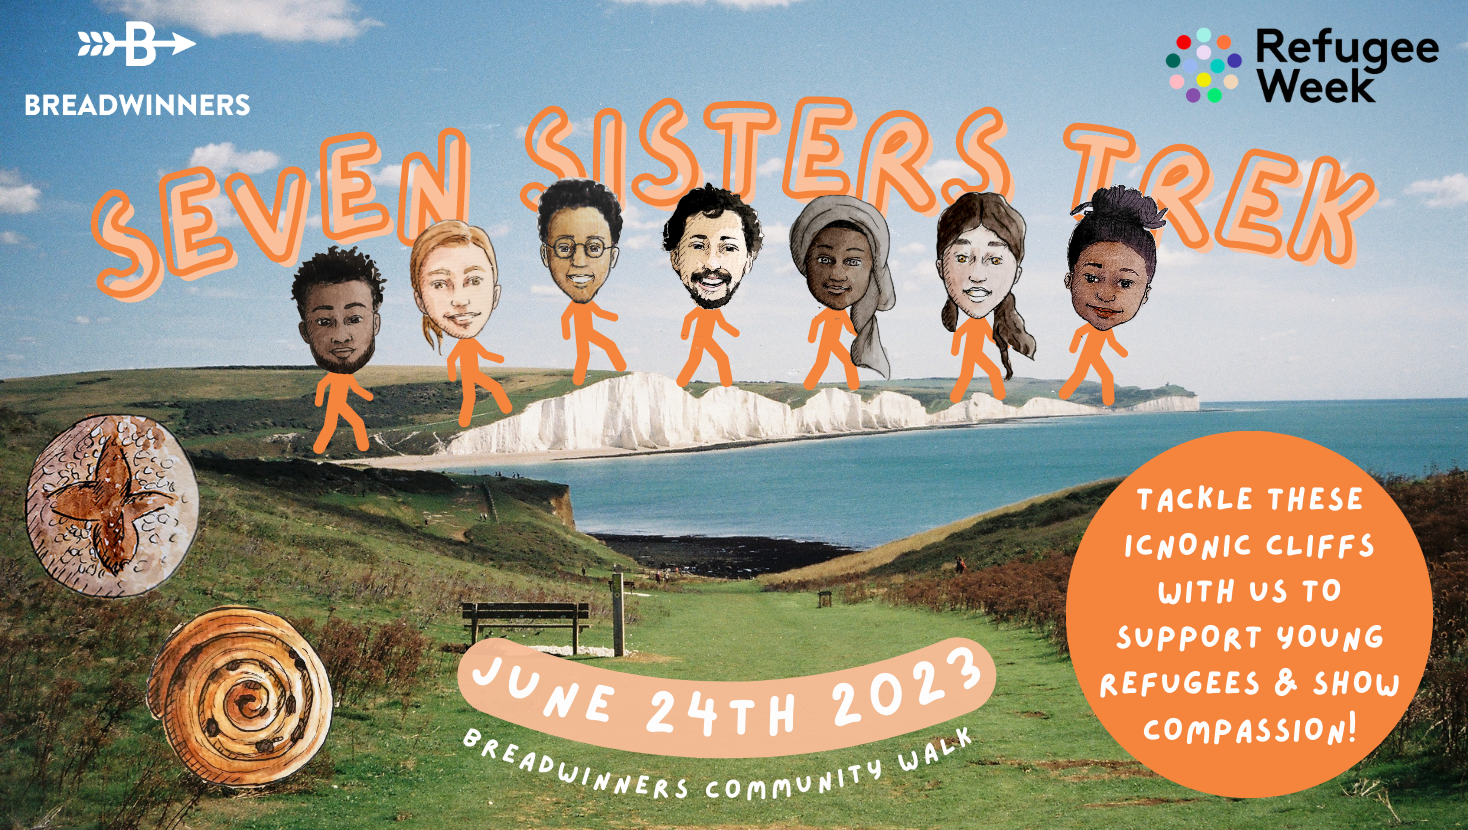 Seven Sisters Trek – Breadwinners Refugee Week Challenge!